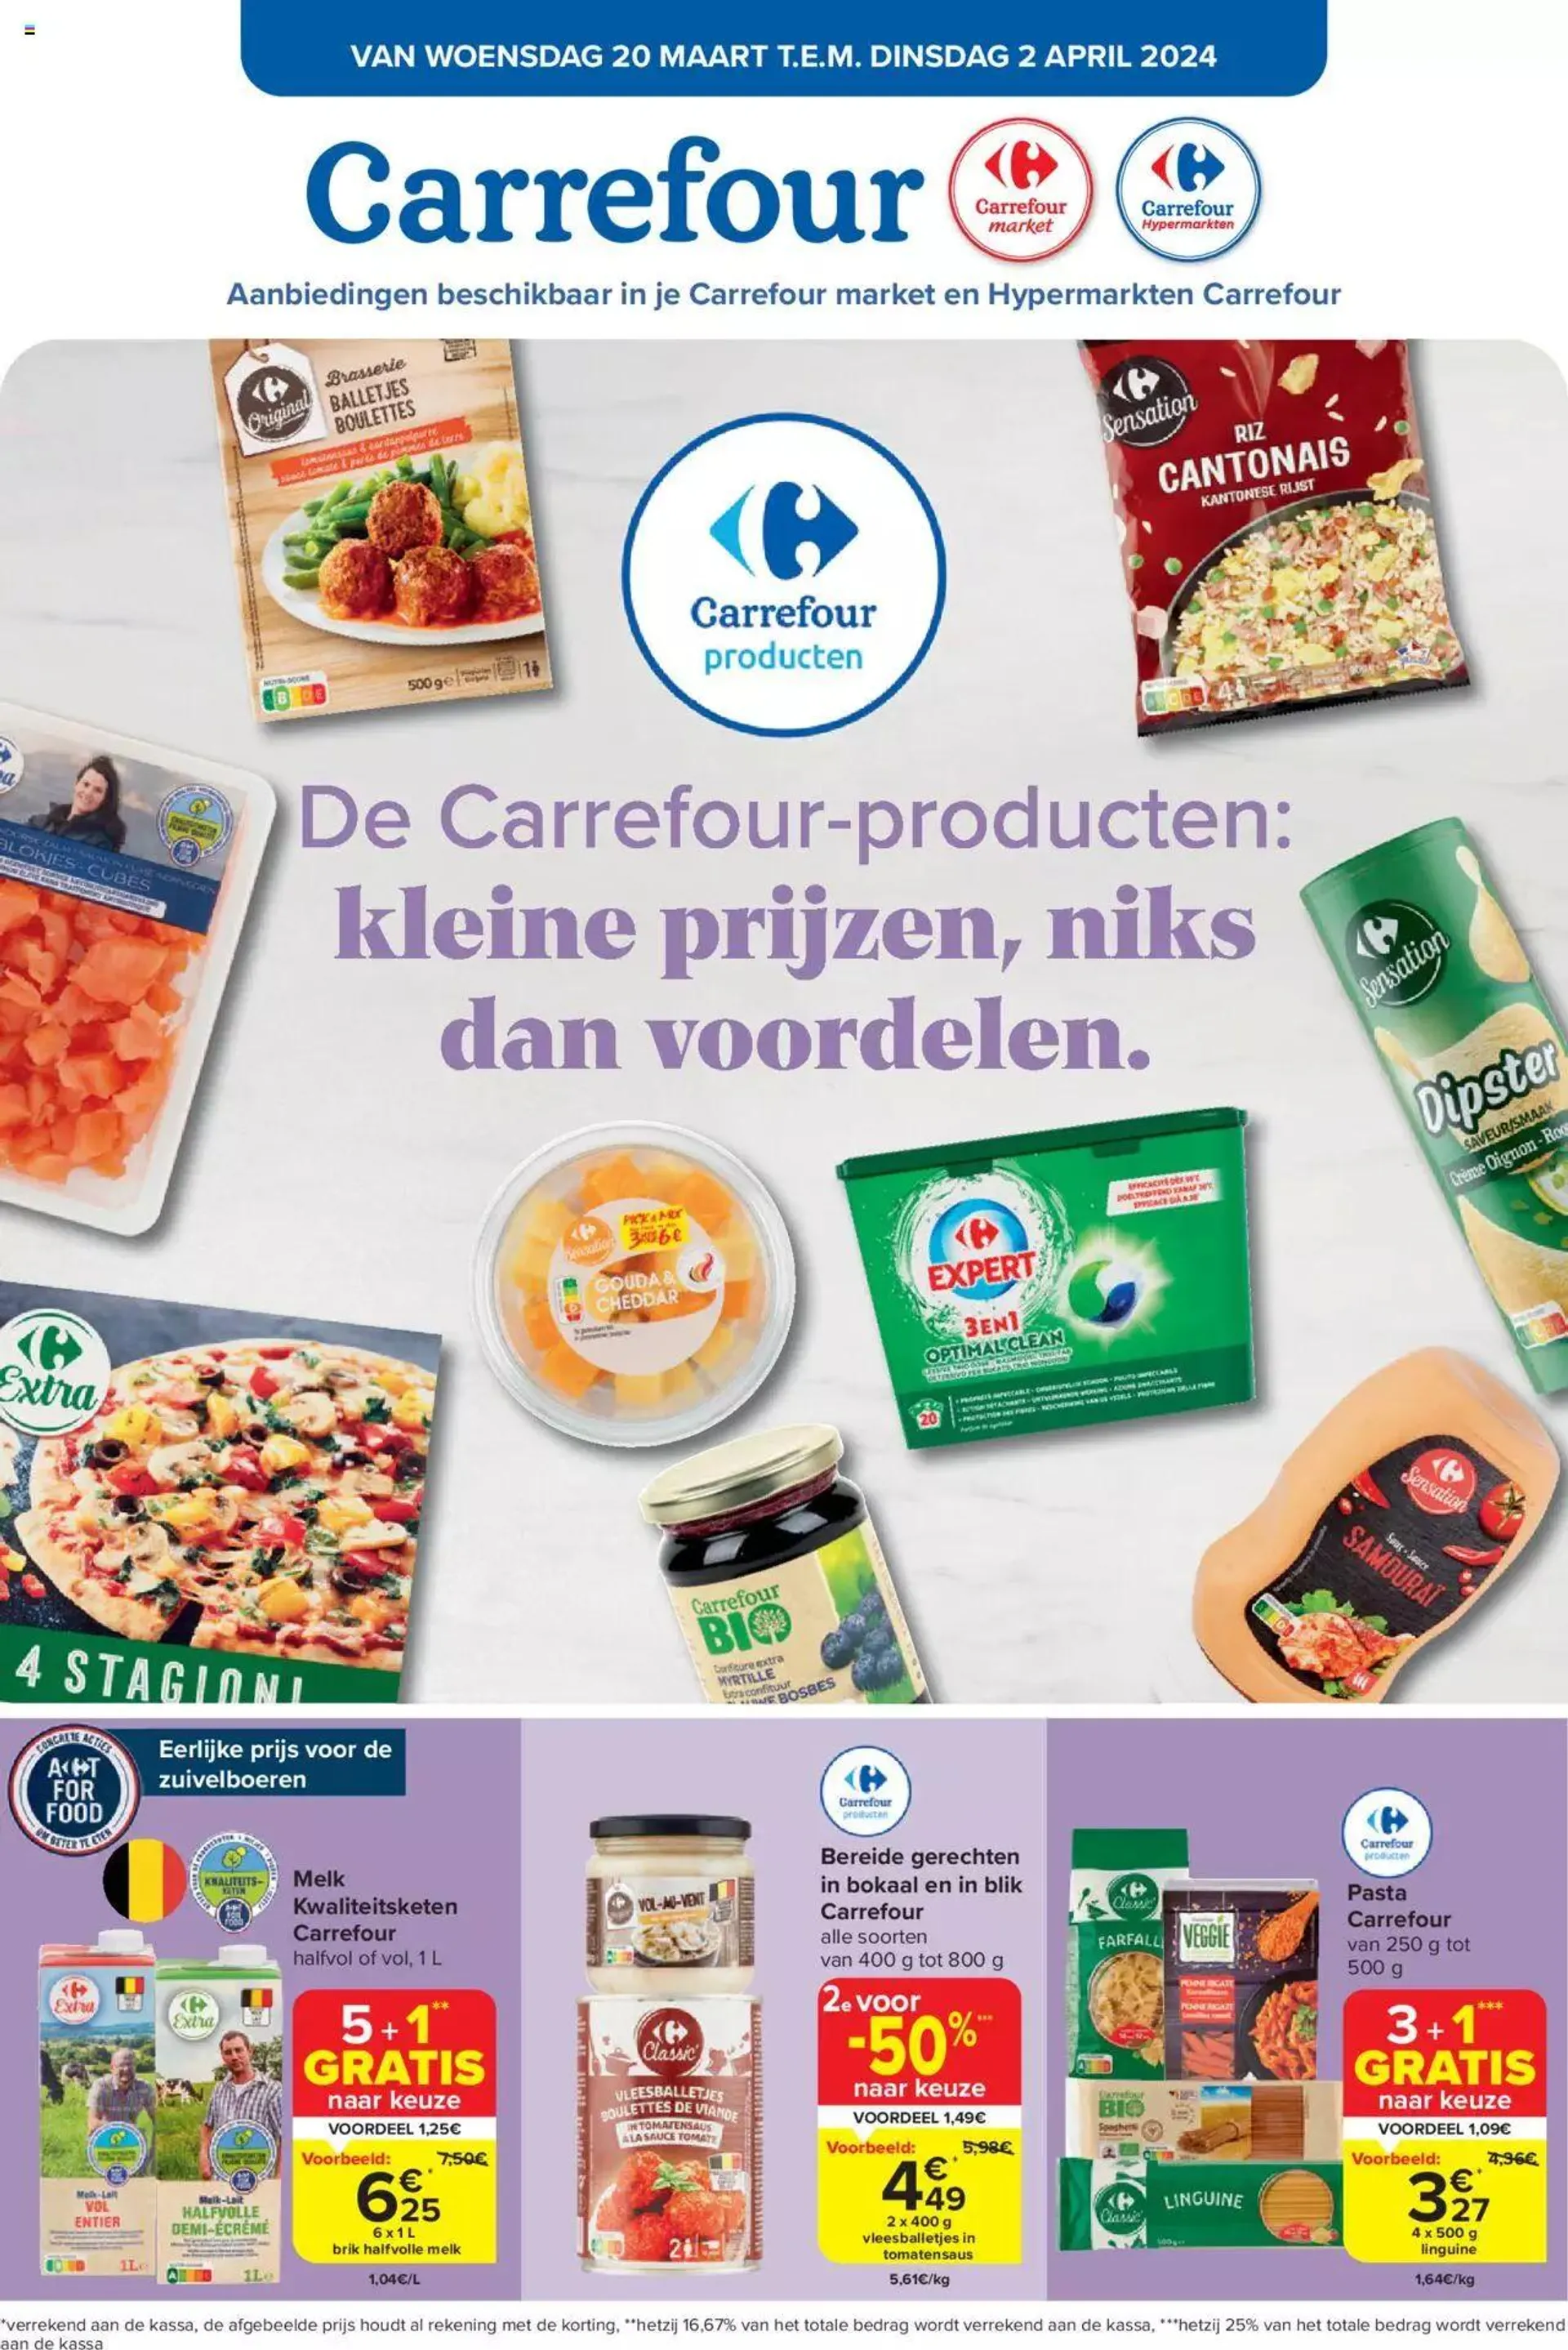 Carrefour Special producten van 2 april tot 20 maart 2024 - folder pagina 1